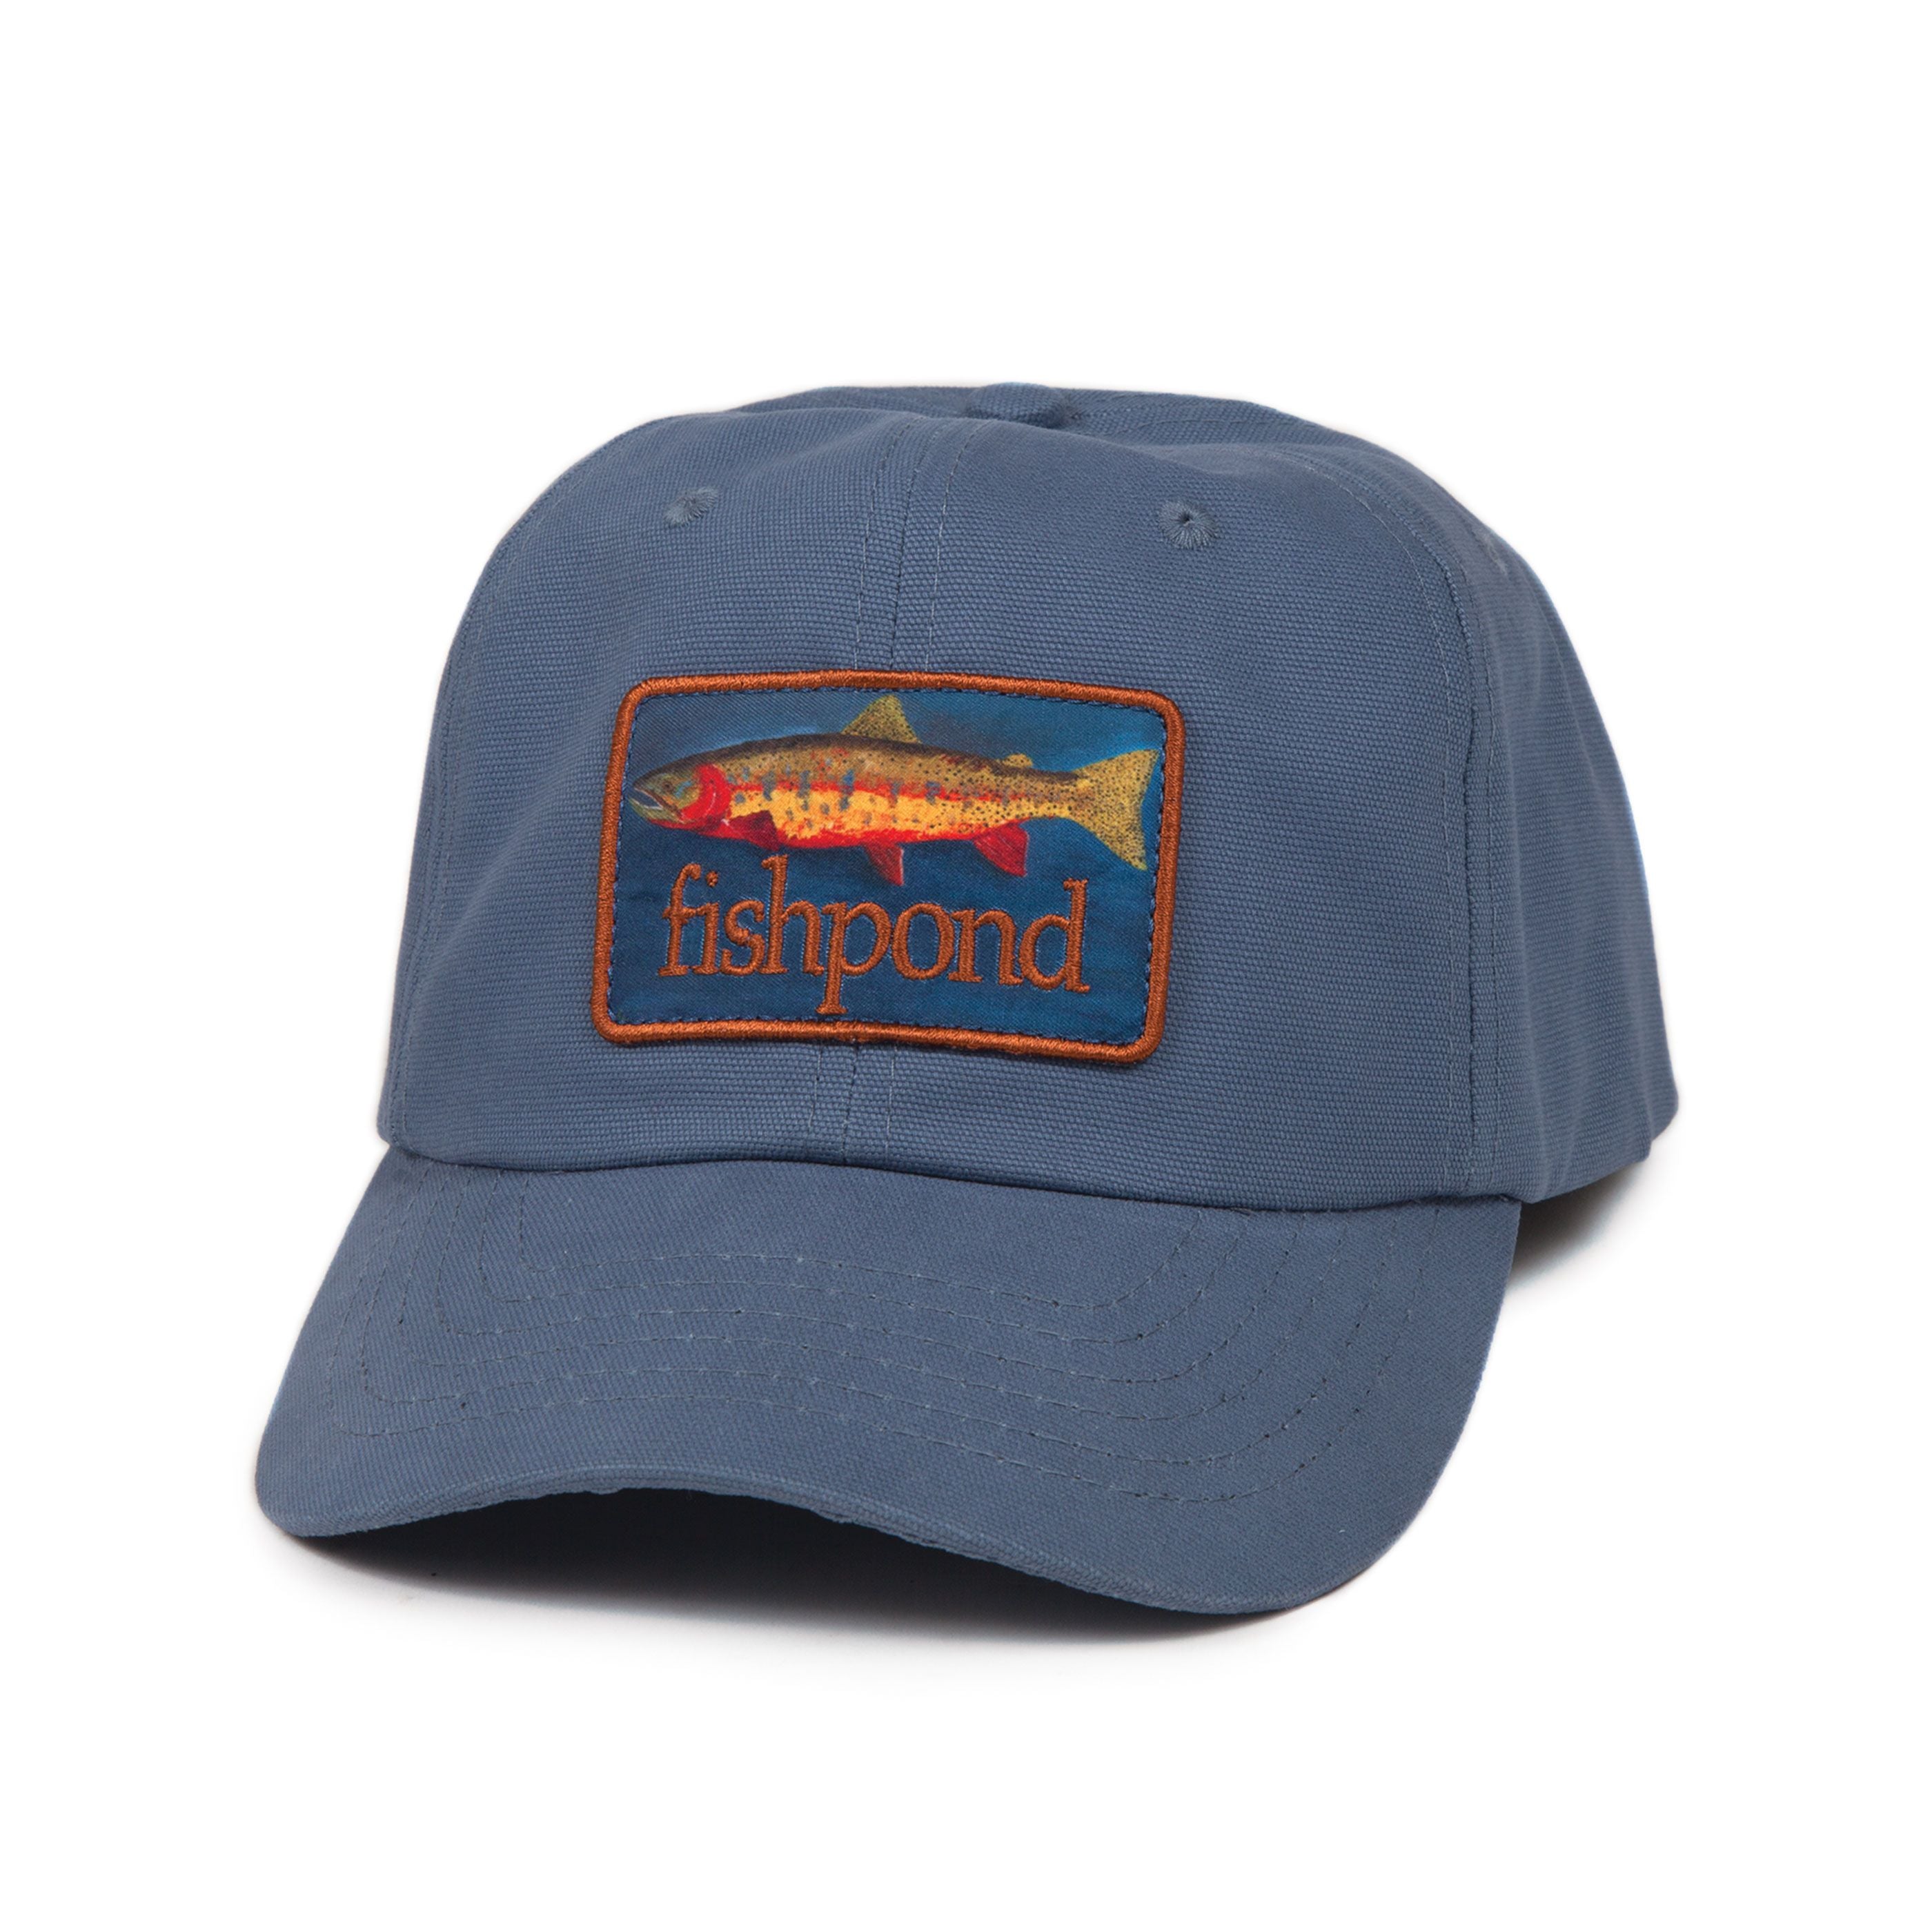 Fishpond Maori Trout Lightweight Hat